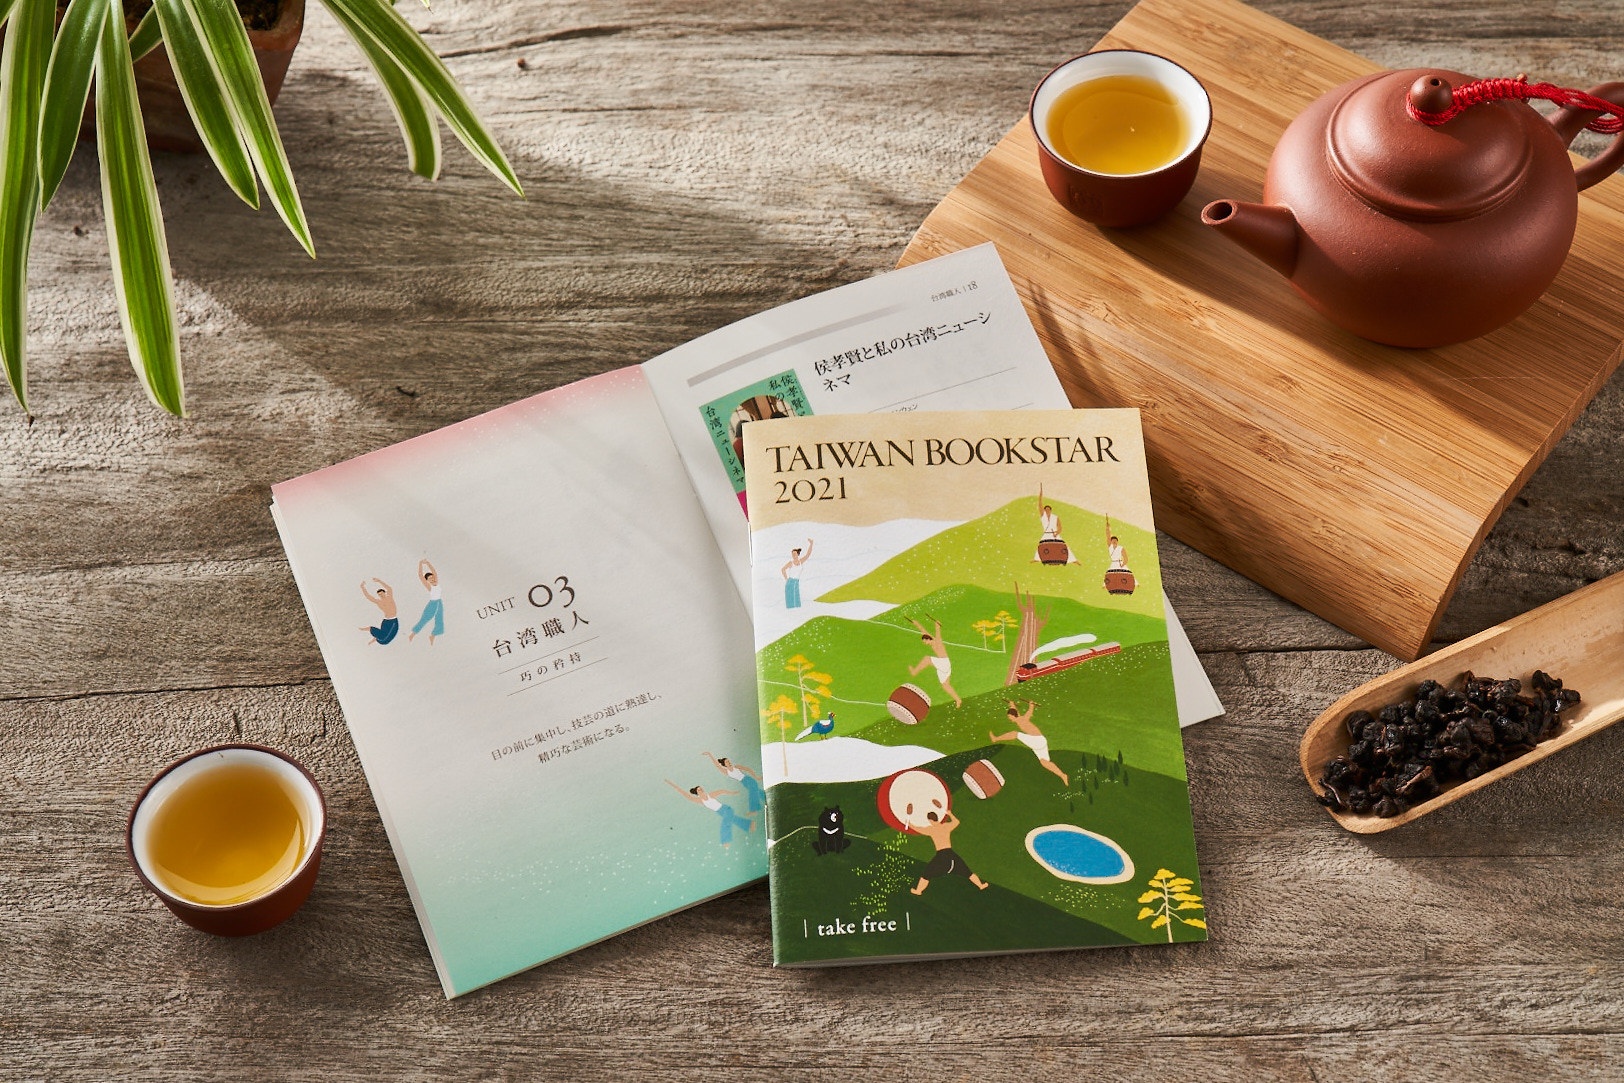 2021 TAIWAN BOOKSTAR」日本語版ブックレット発行に寄せて 書店の匠